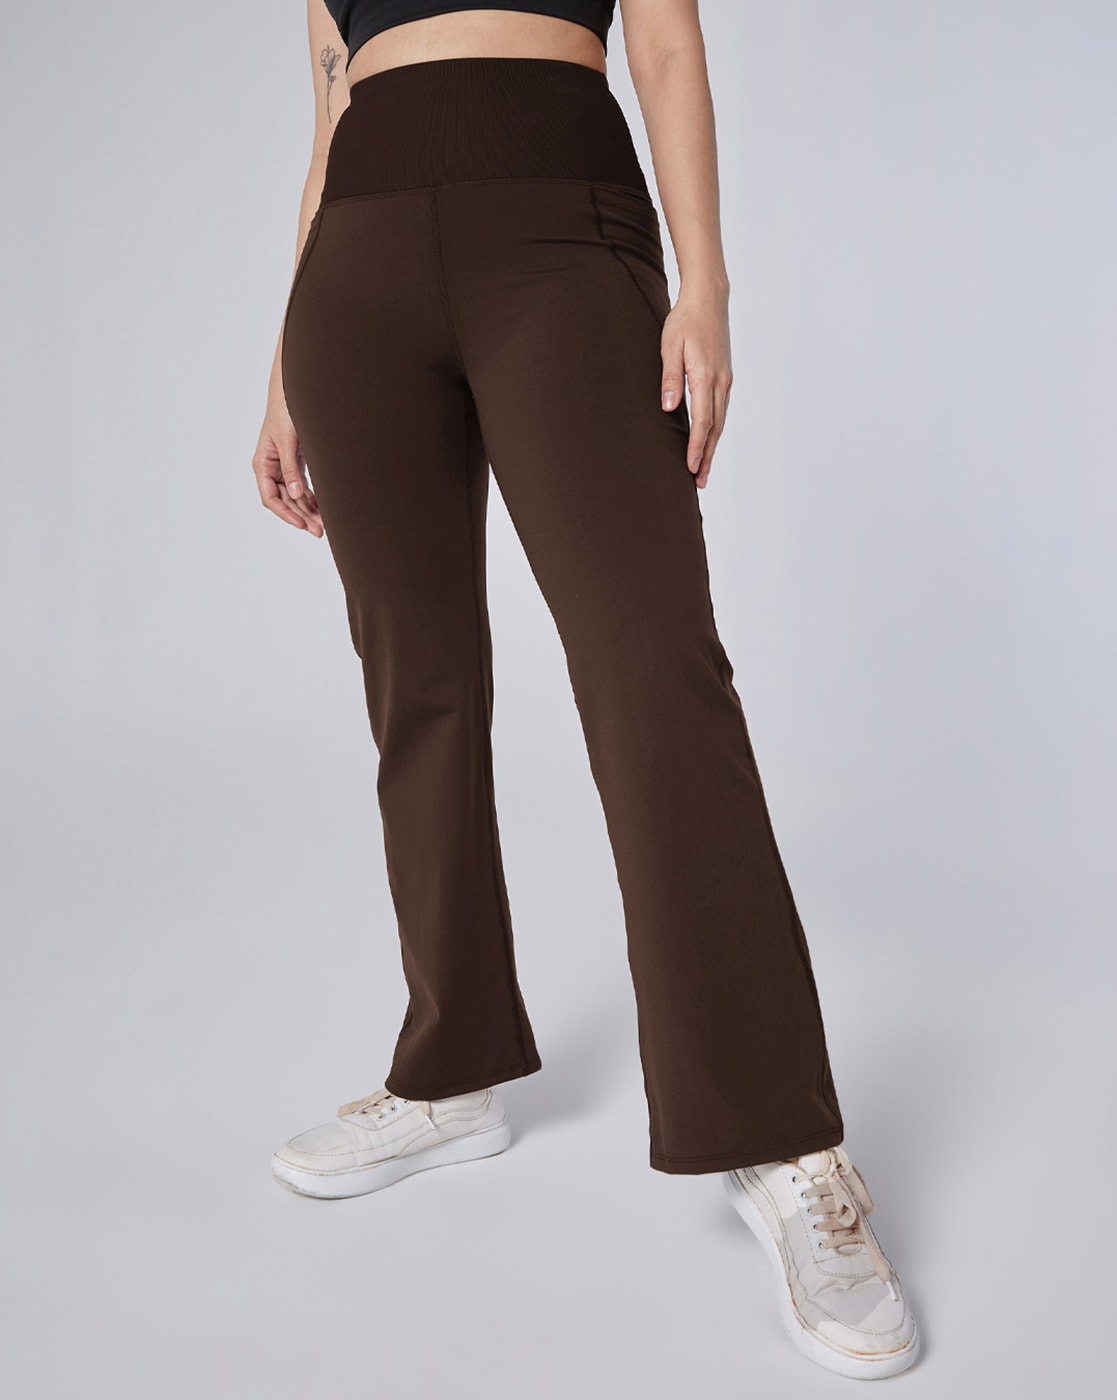 Buy Barkha Brown Trousers & Pants for Women by BLISSCLUB